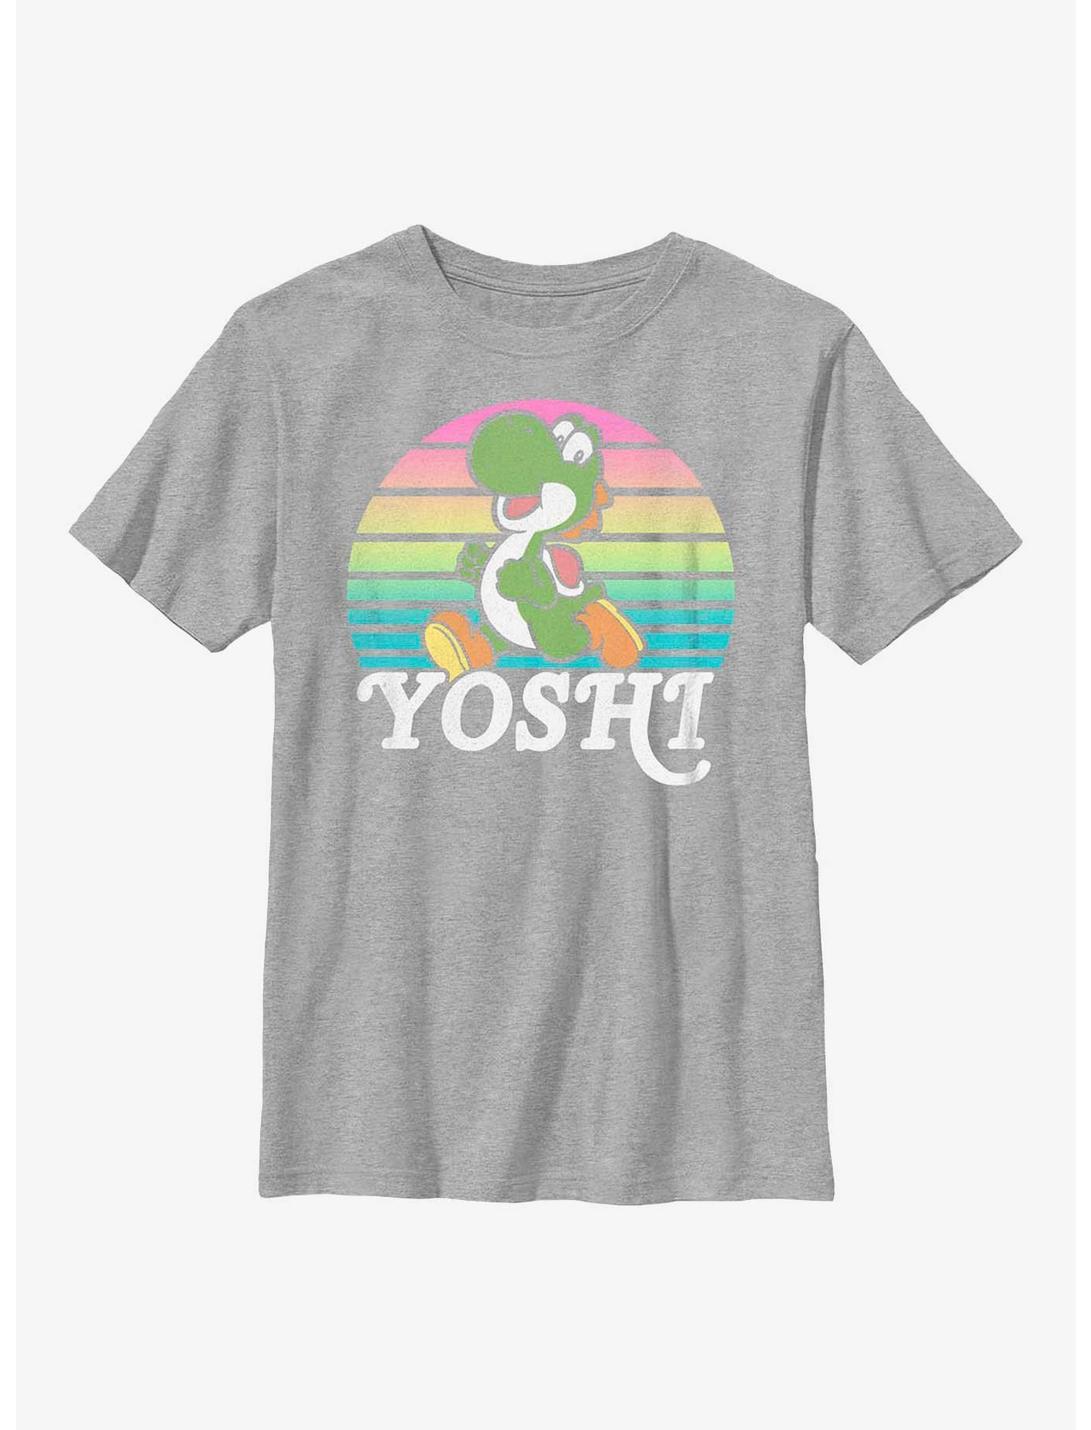 Nintendo Mario Yoshi Run Youth T-Shirt, ATH HTR, hi-res